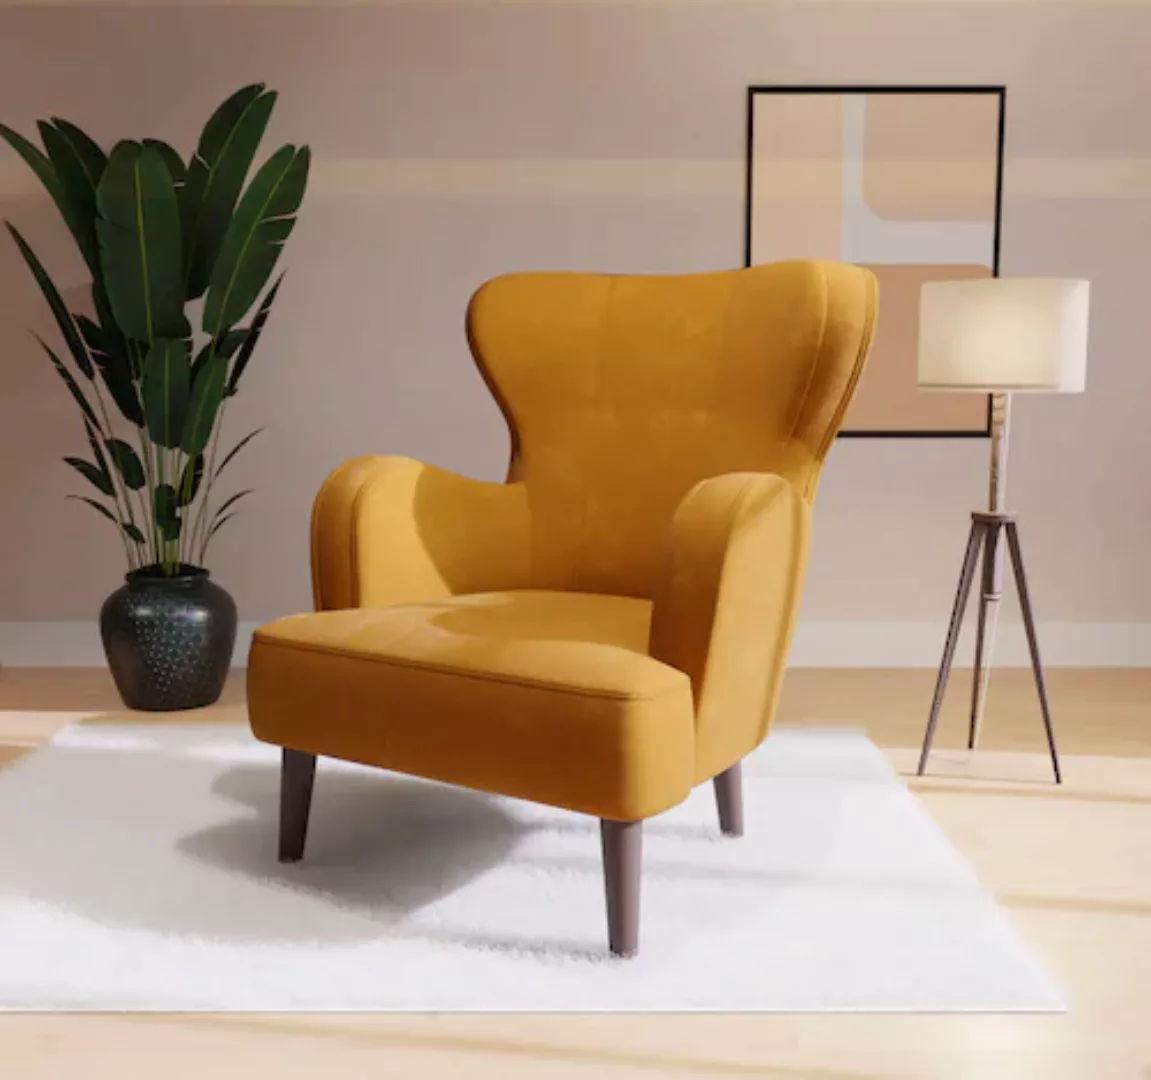 Home affaire Sessel »SICILIA B/T/H: 68/64/88 cm«, moderner Ohrensessel günstig online kaufen